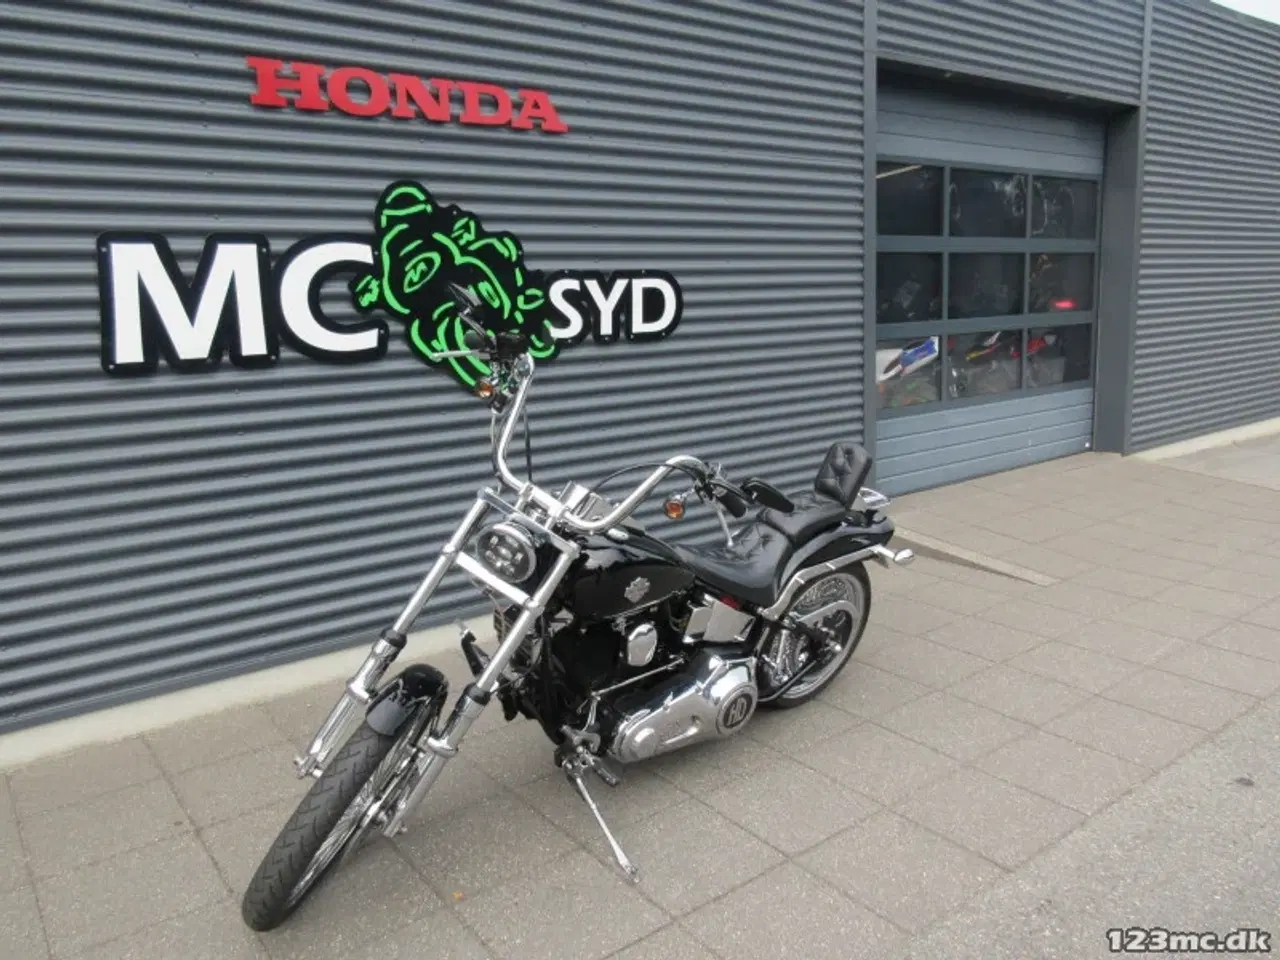 Billede 16 - Harley-Davidson FXSTC Softail Custom MC-SYD ENGROS /Bytter gerne